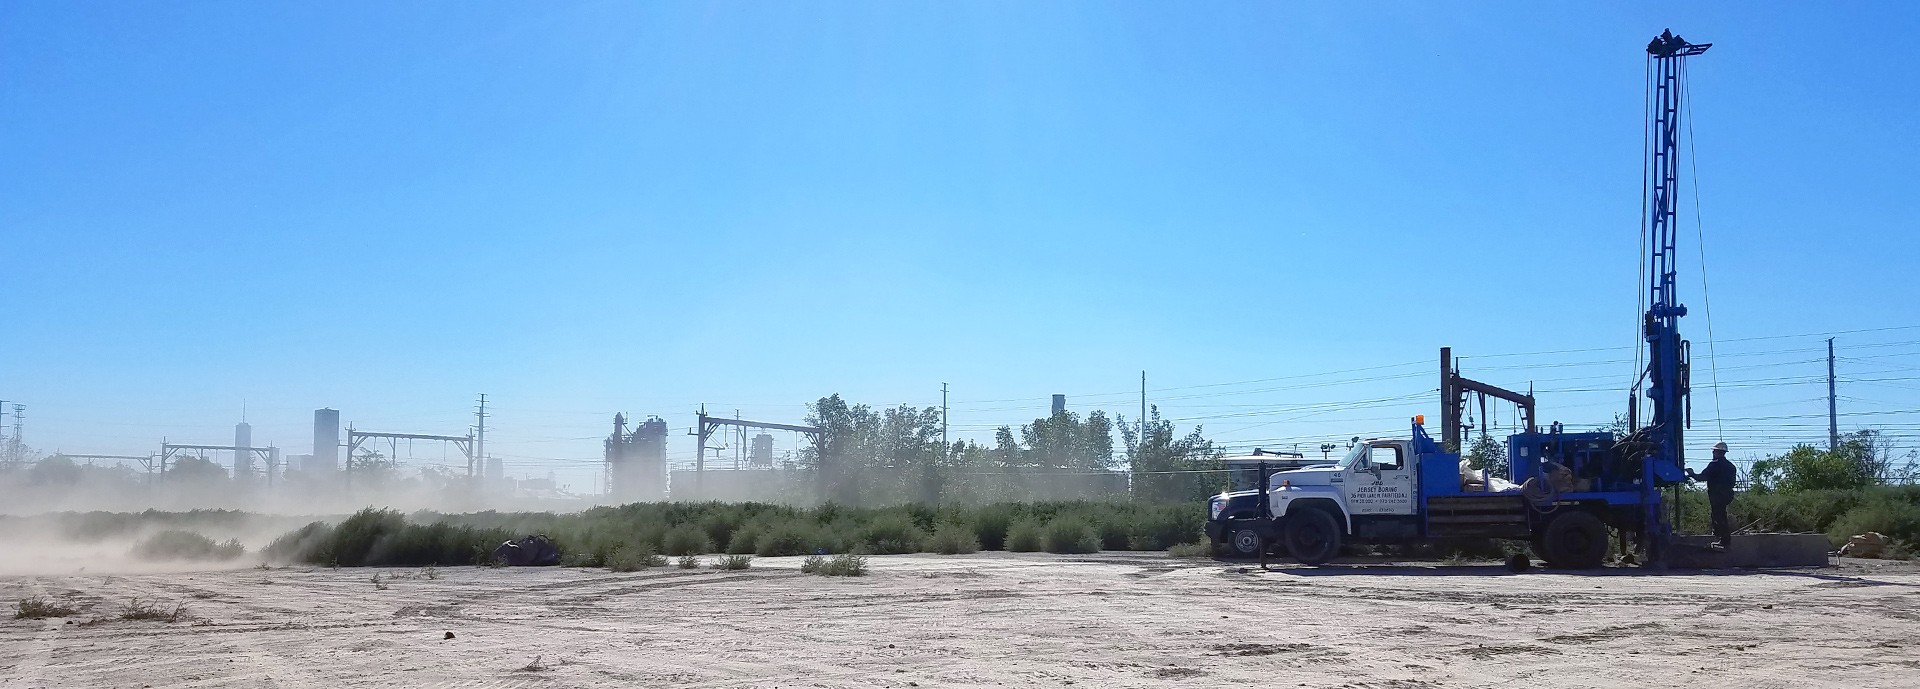 soil drilling equipment on sandy dirt terrain with blue sky near train tracks